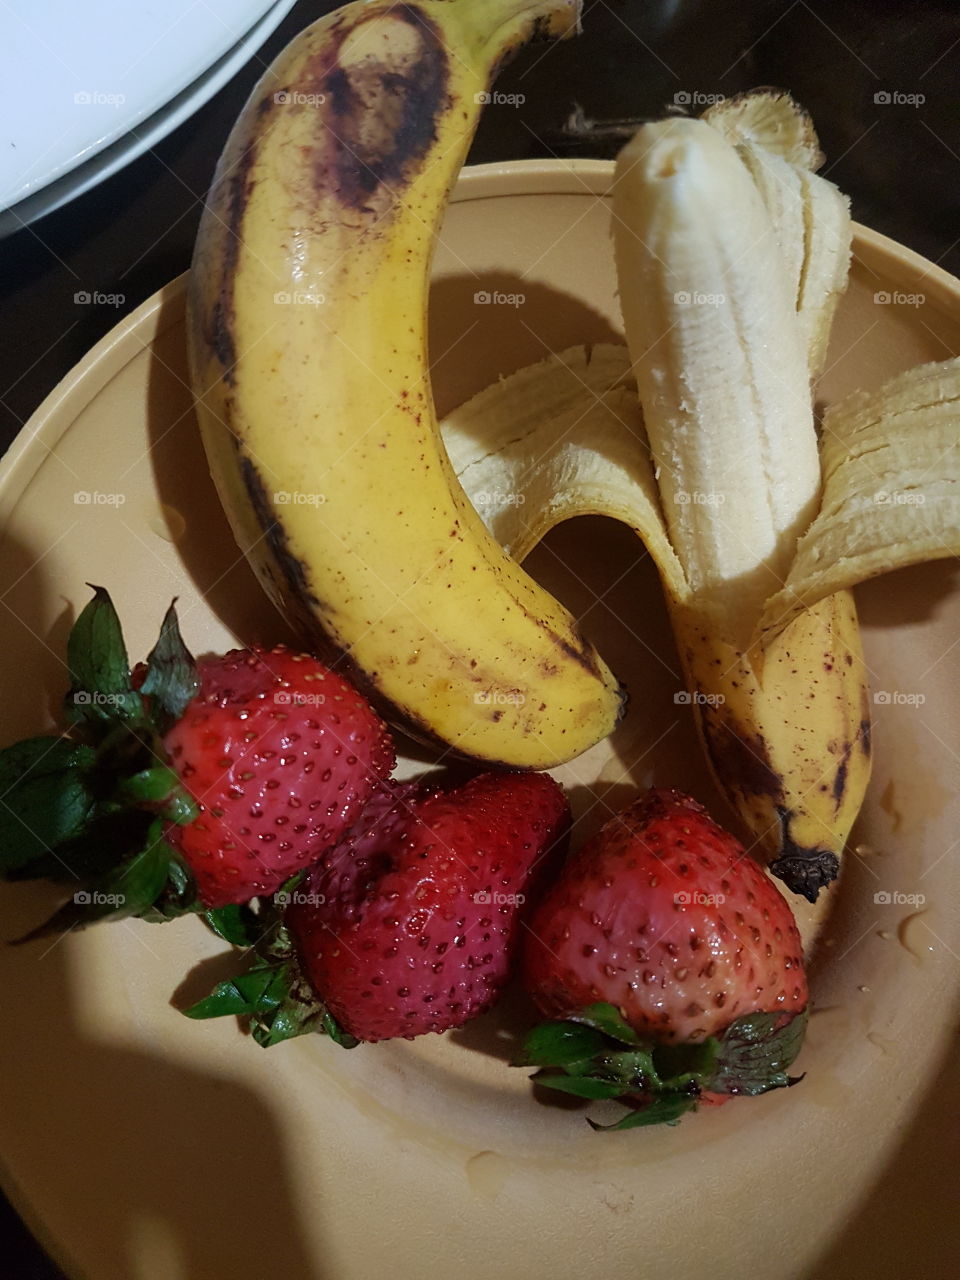 strawberry and banana